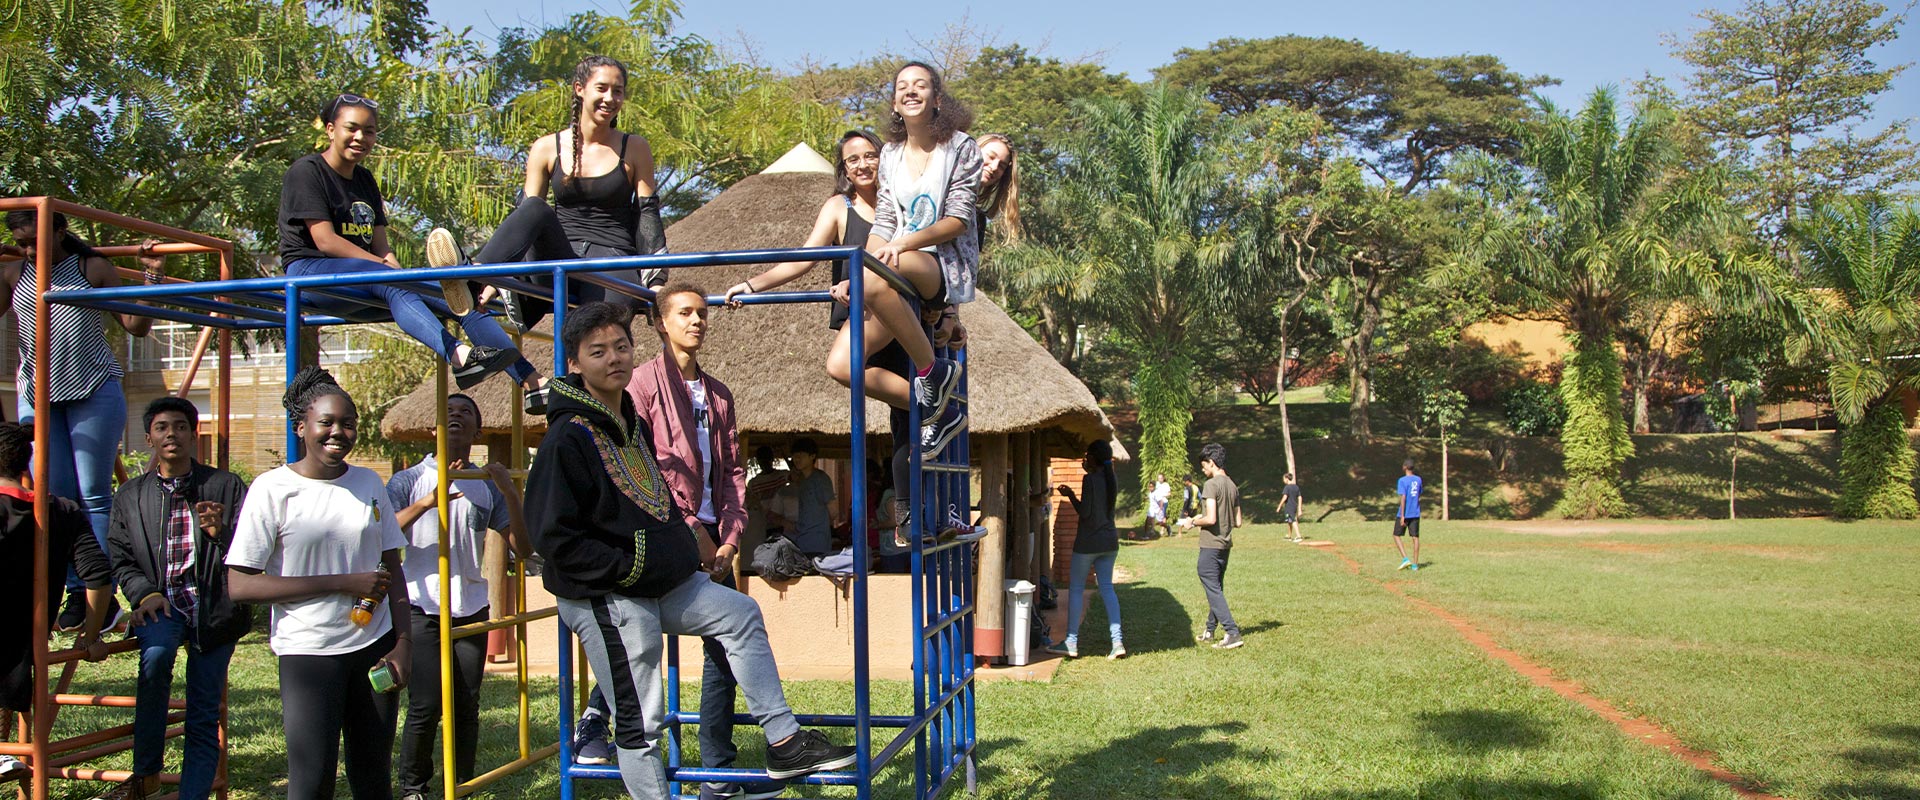 ISU alumni smiling and playing on a climbing frame